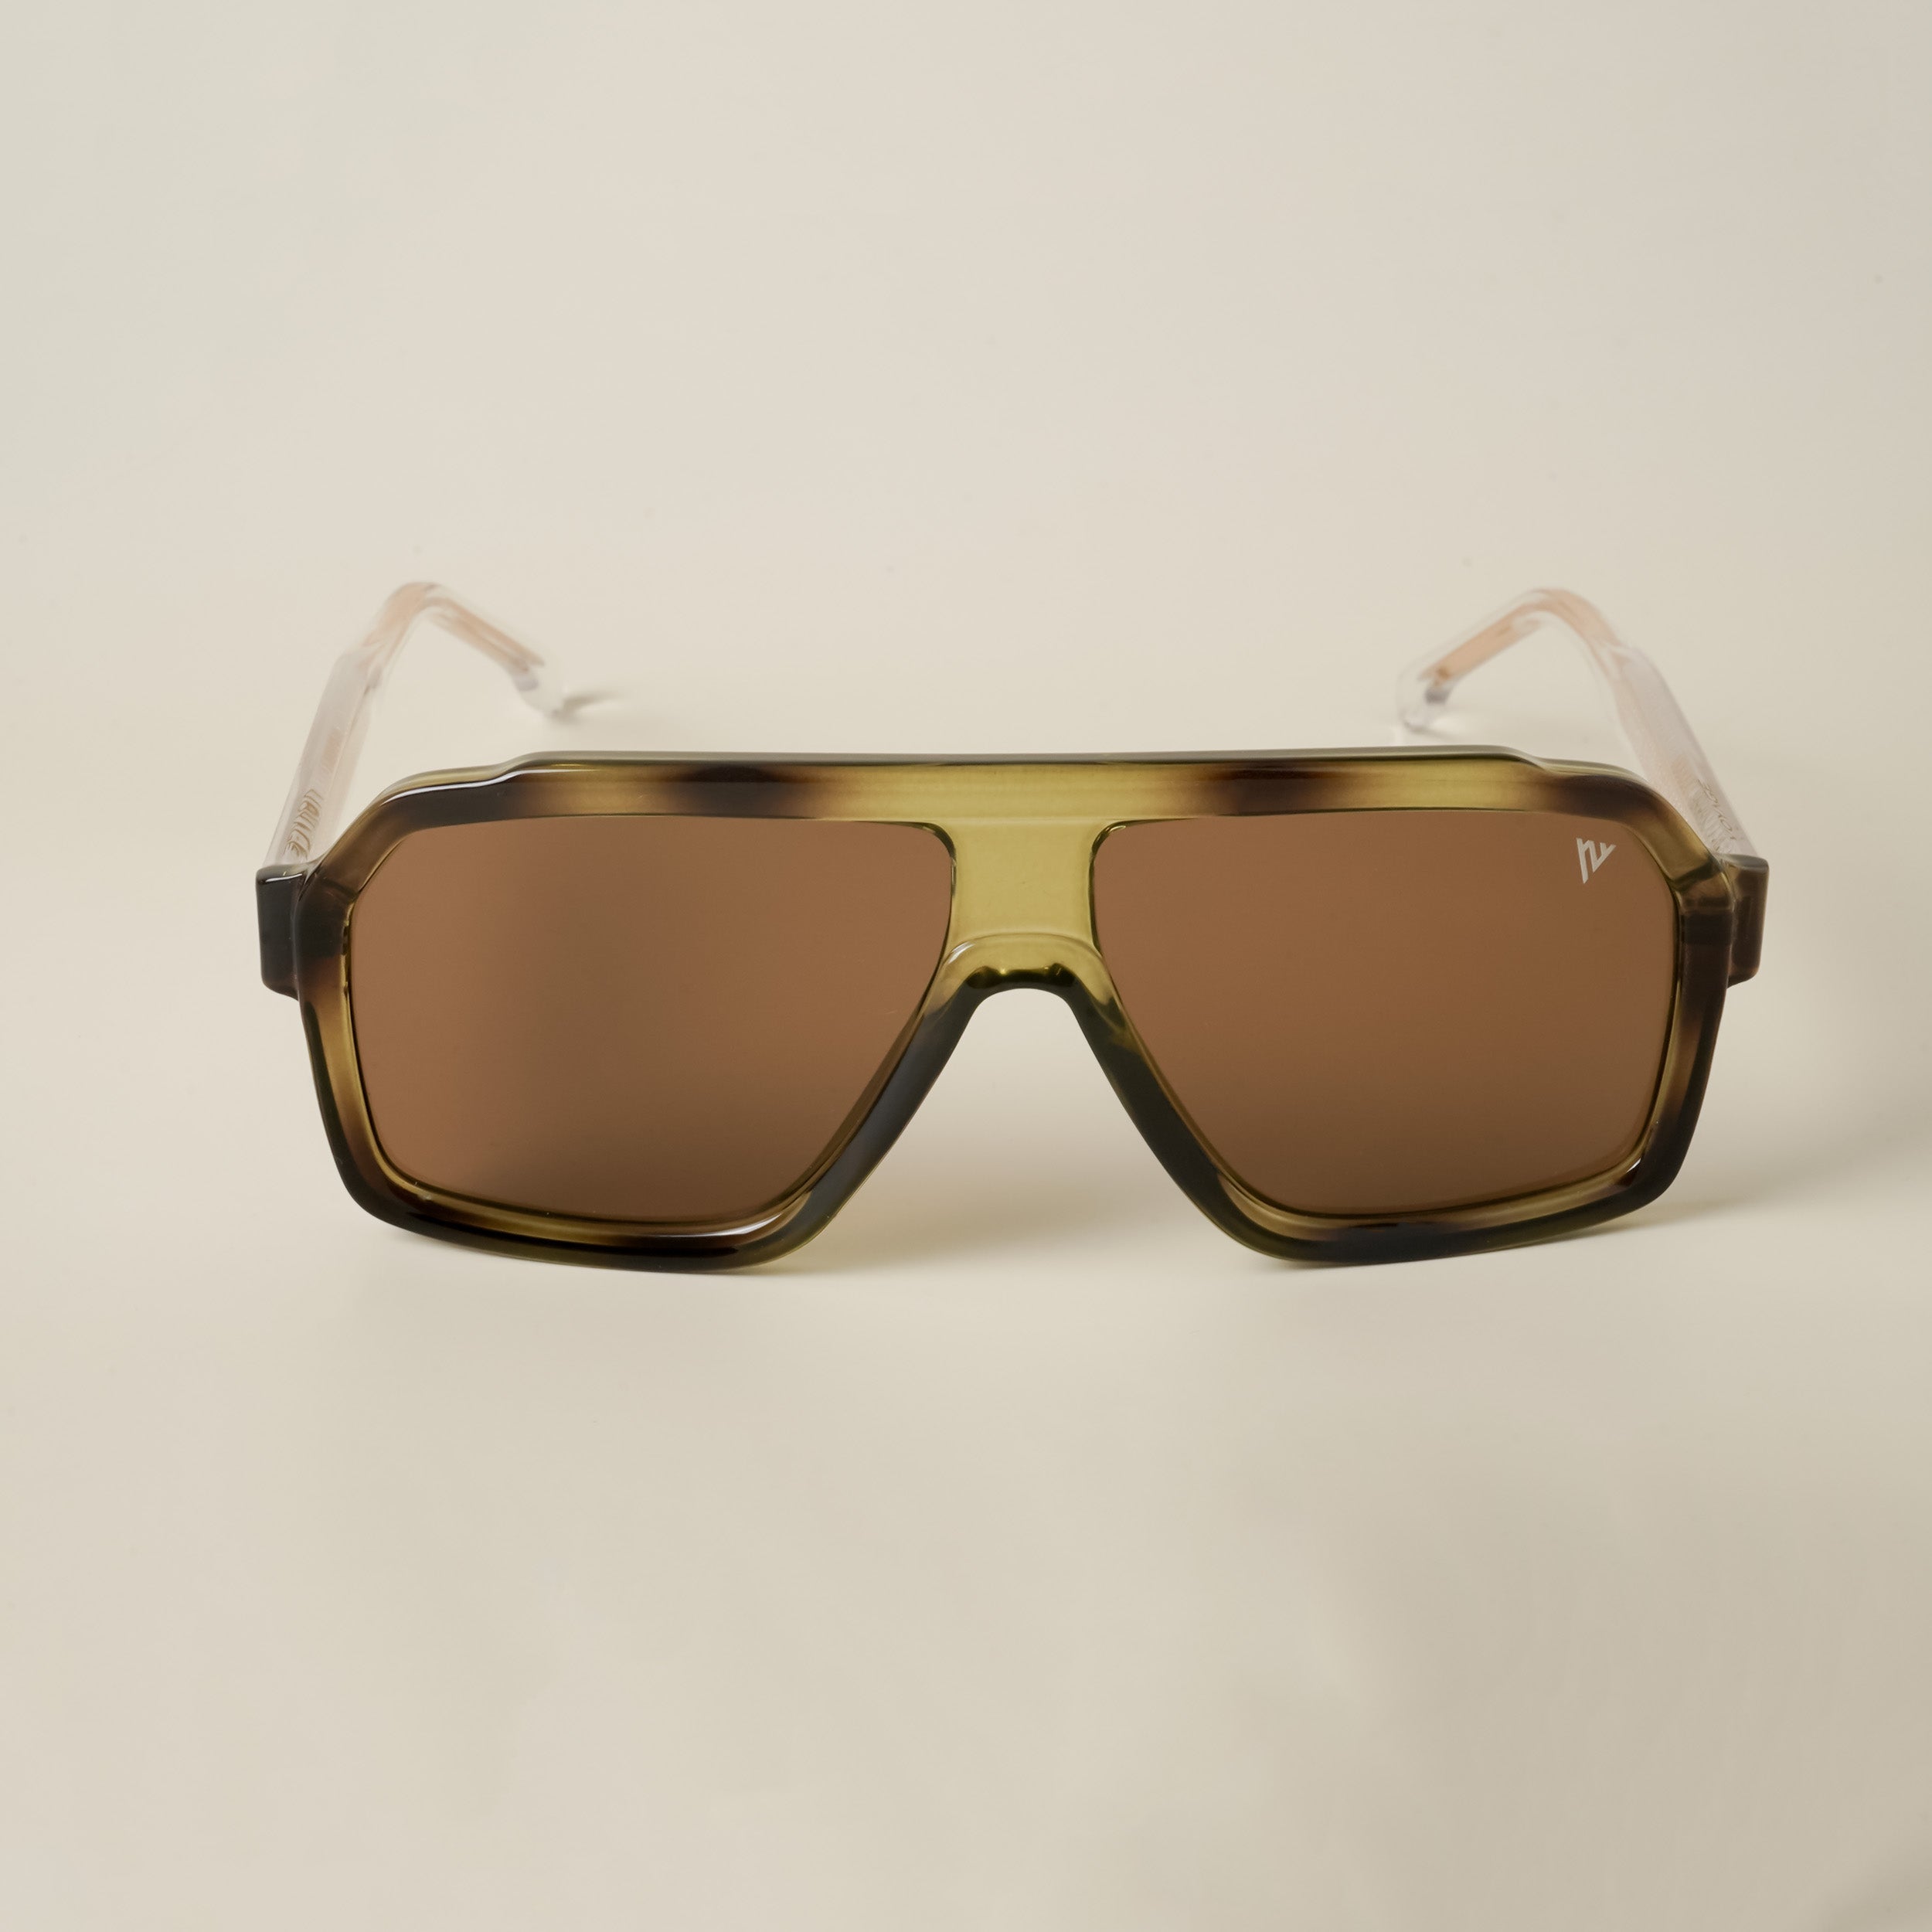 Voyage Brown Wrap Around Sunglasses for Men & Women - MG4746